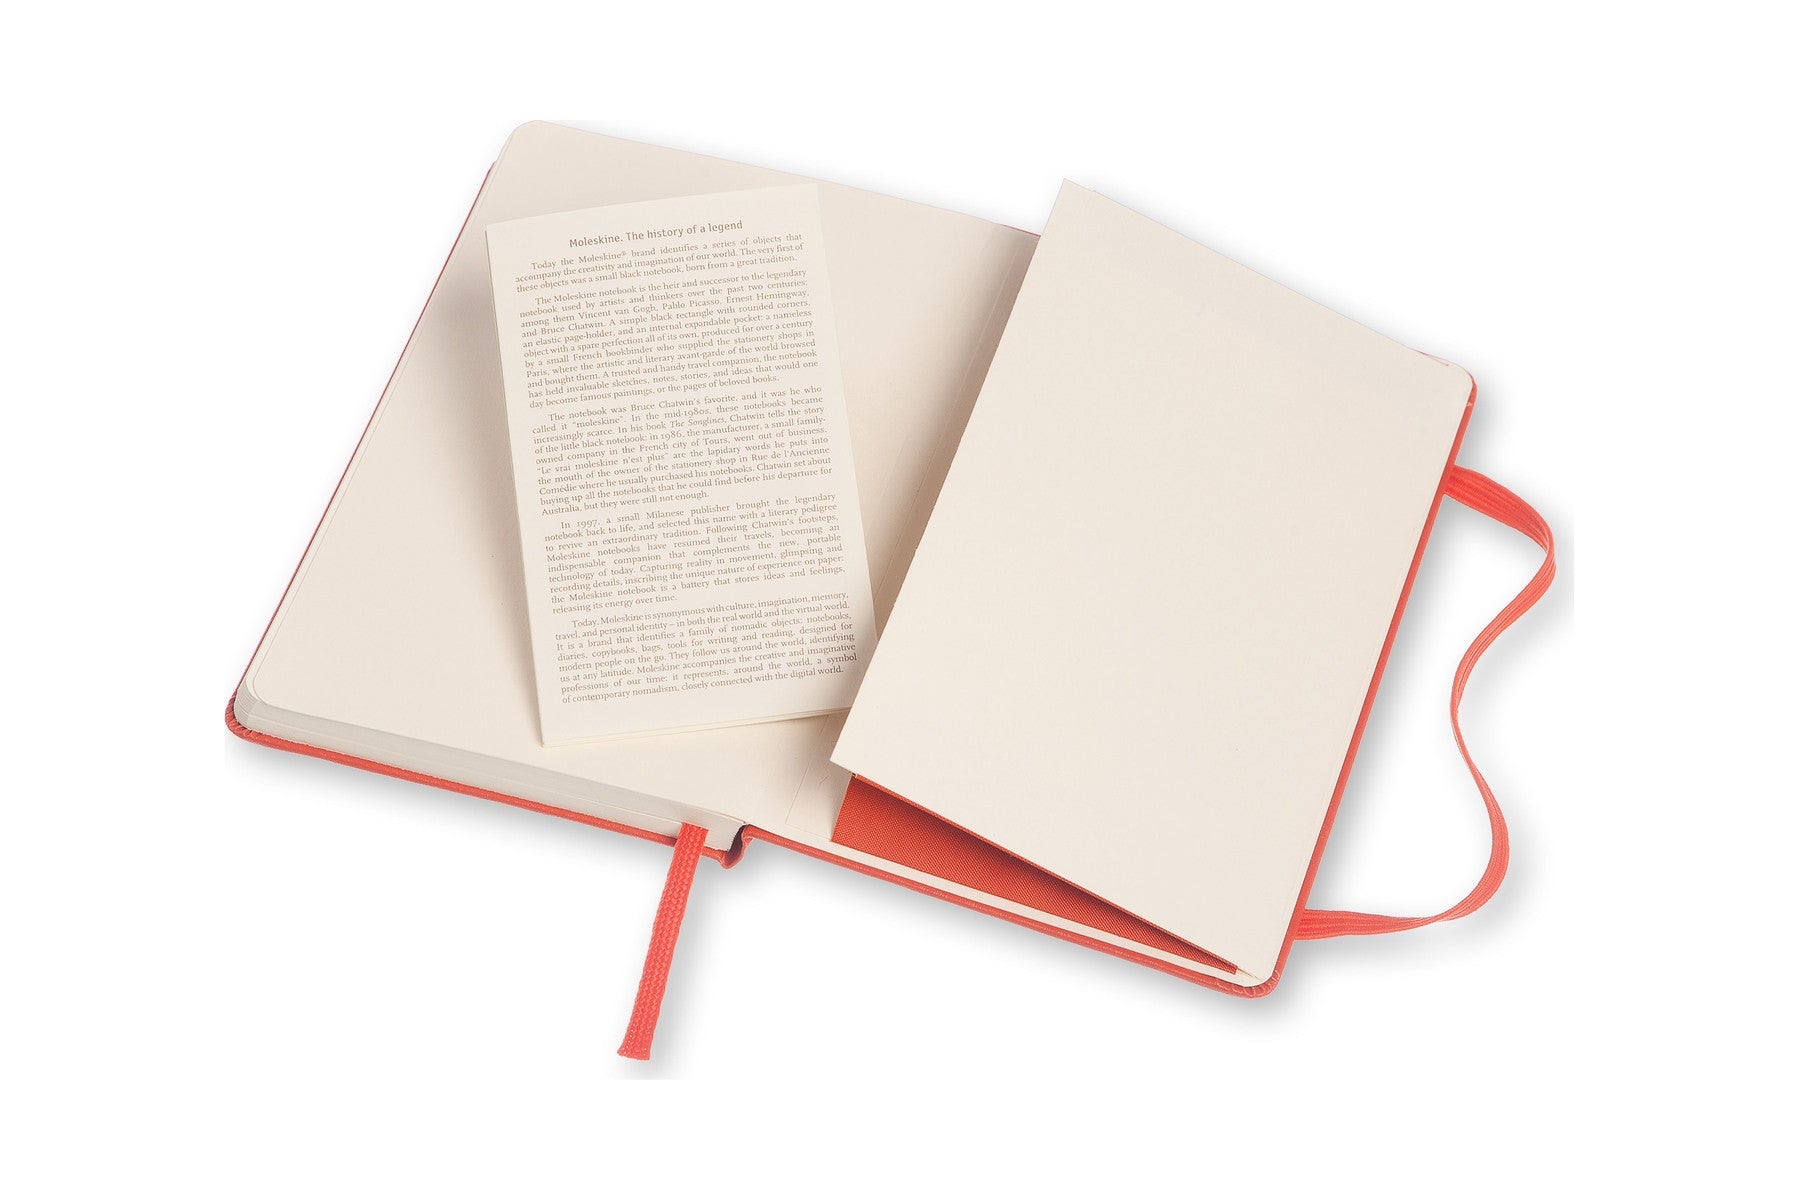 Moleskine notebook harde kaft in pocketformaat